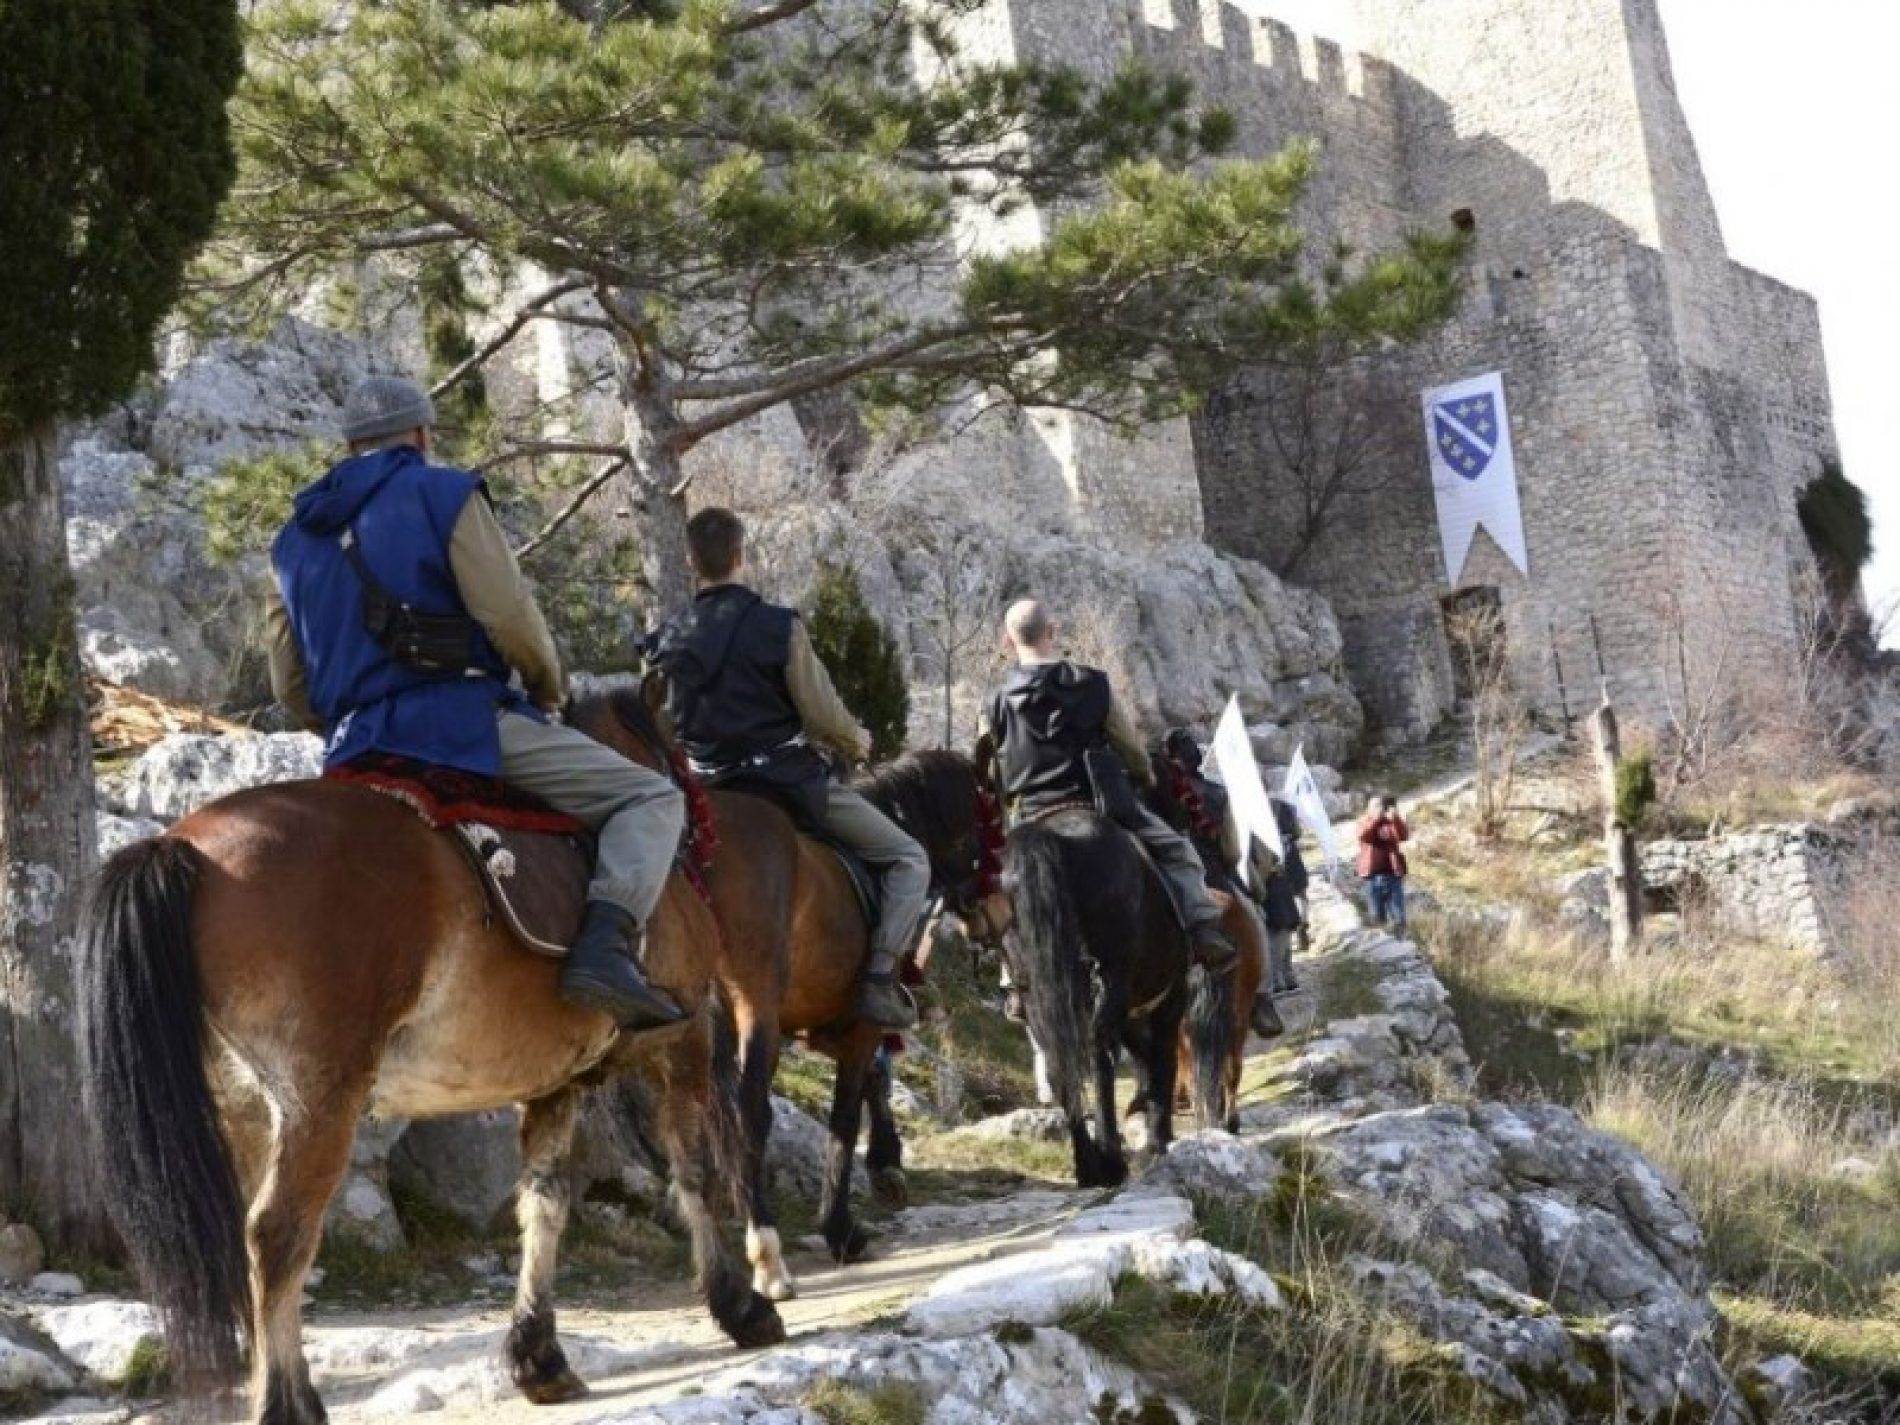 Blagaj: “Stazom bosanskih vitezova” povodom Dana nezavisnosti